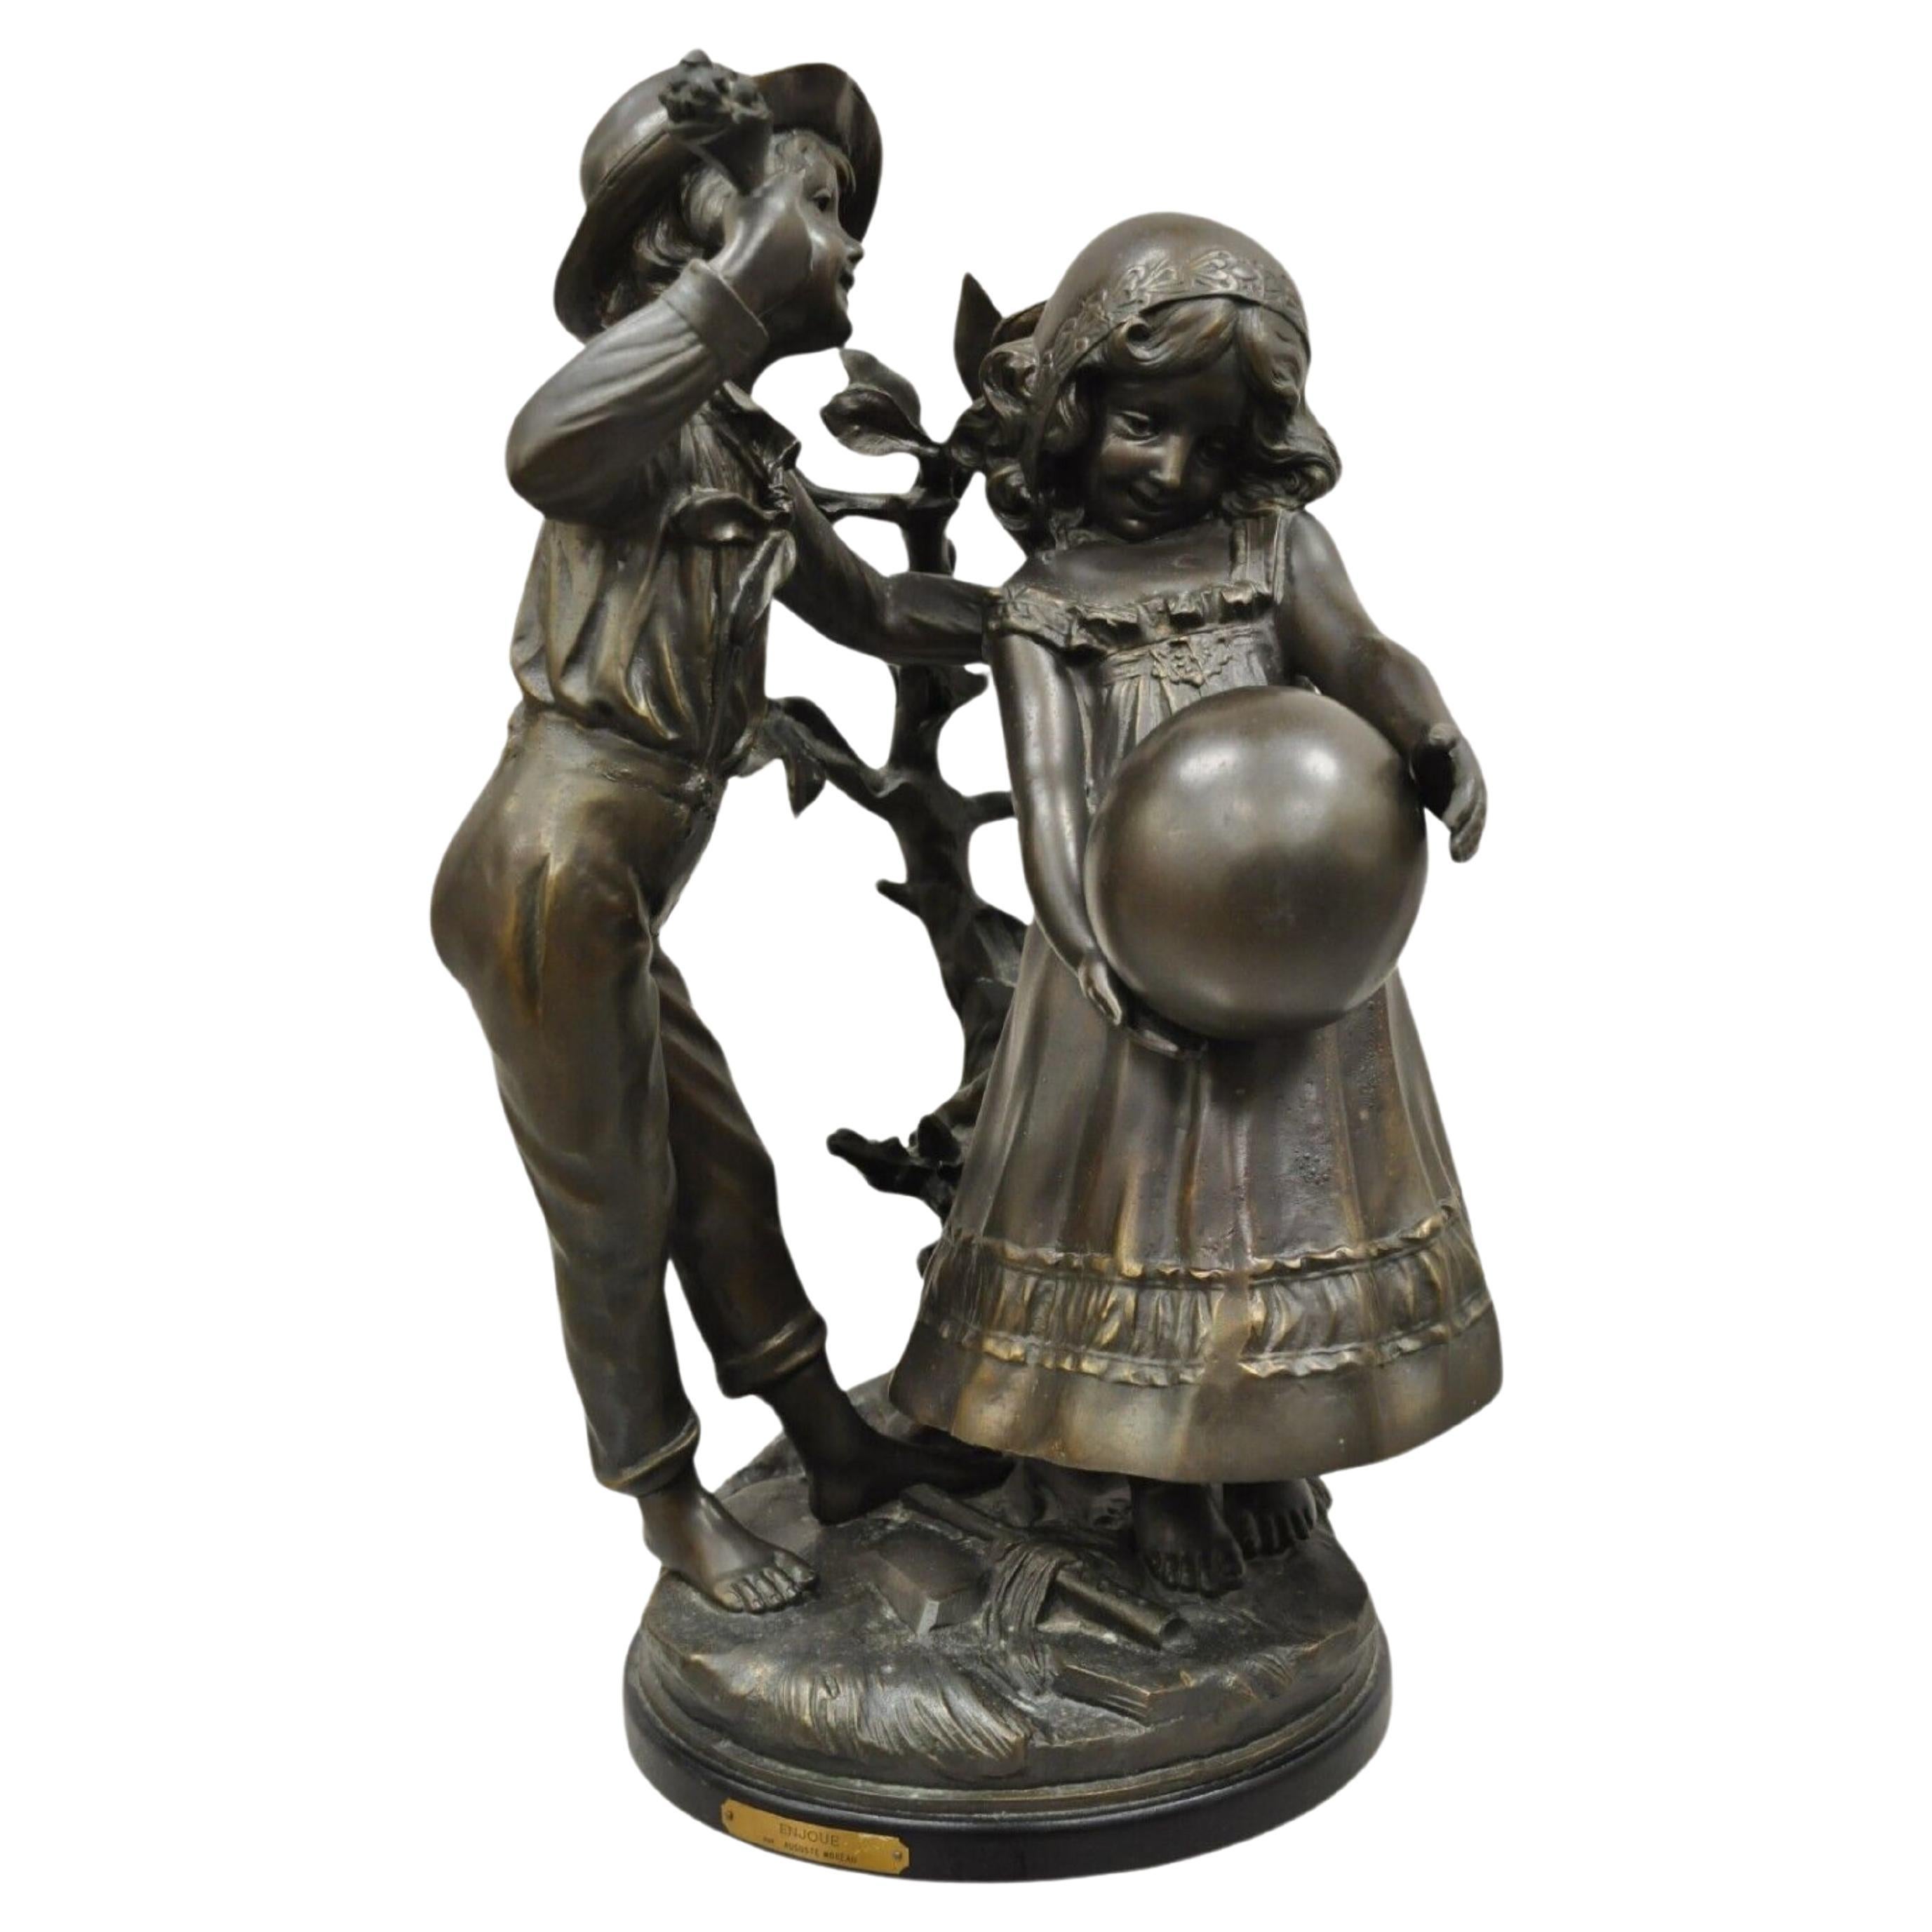 "Enjoue" after Auguste Moreau Bronze Boy and Girl Statue Sculpture